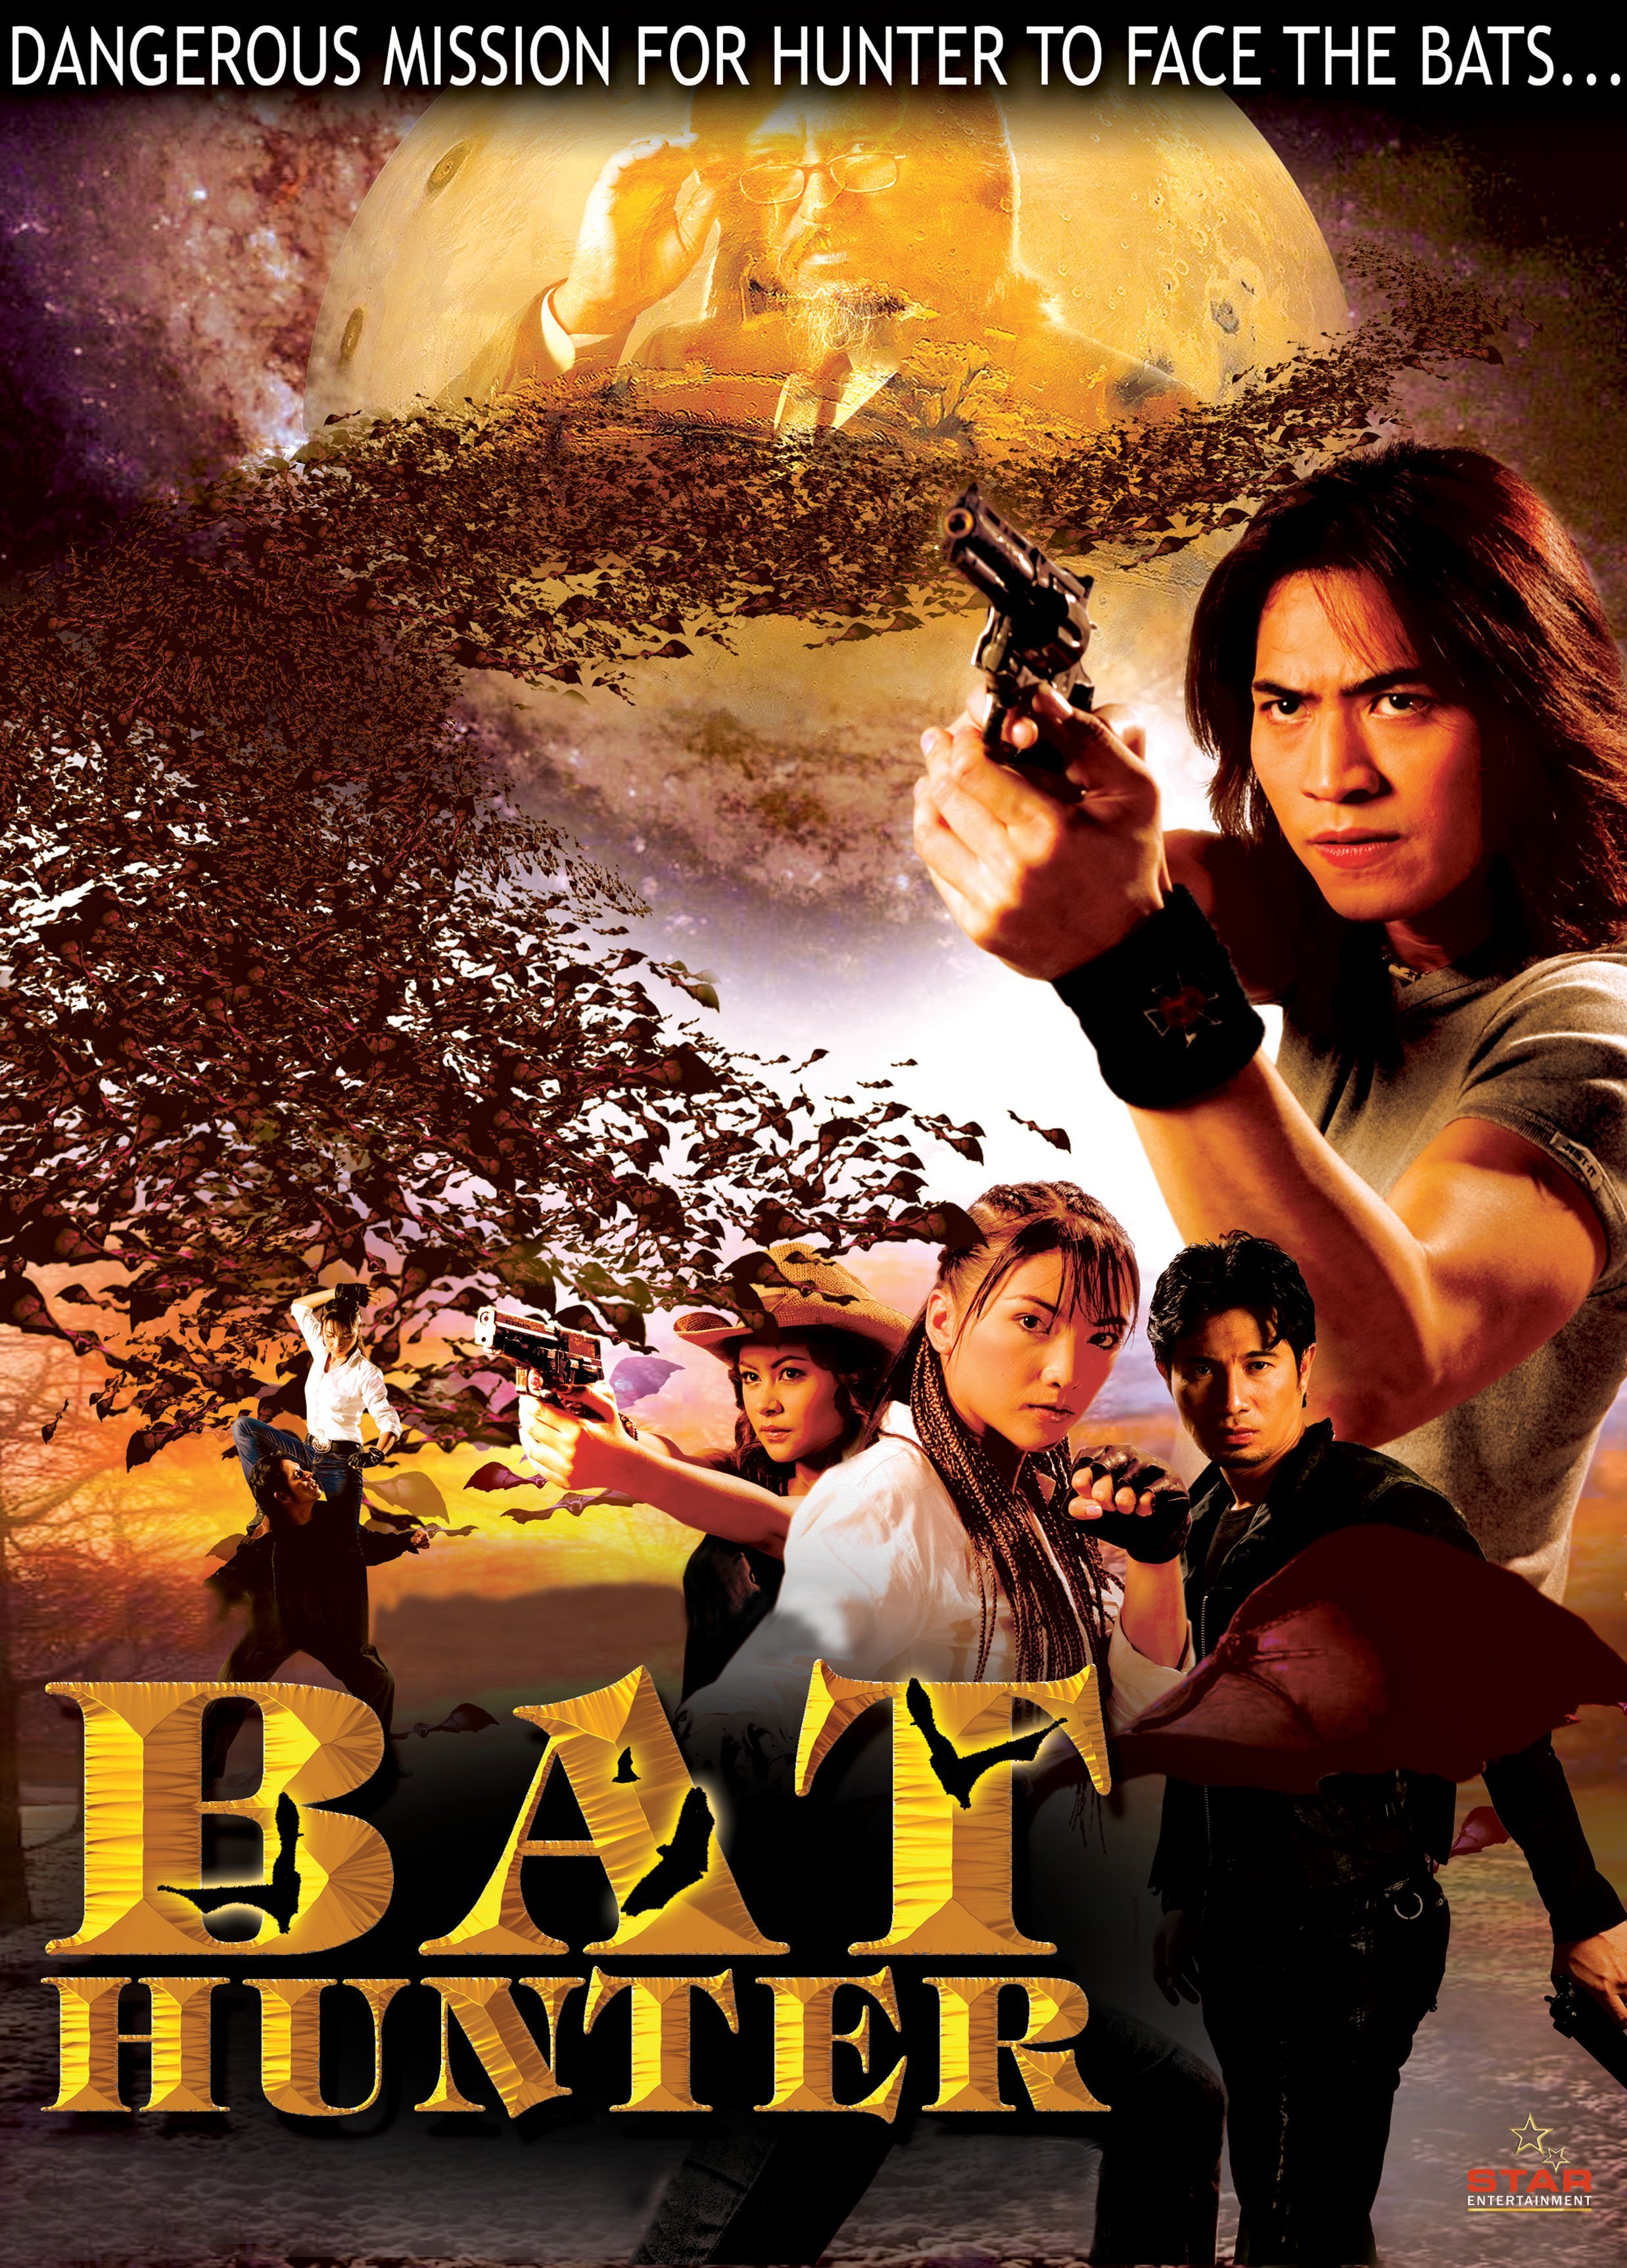 Bat Hunter (2006) Screenshot 1